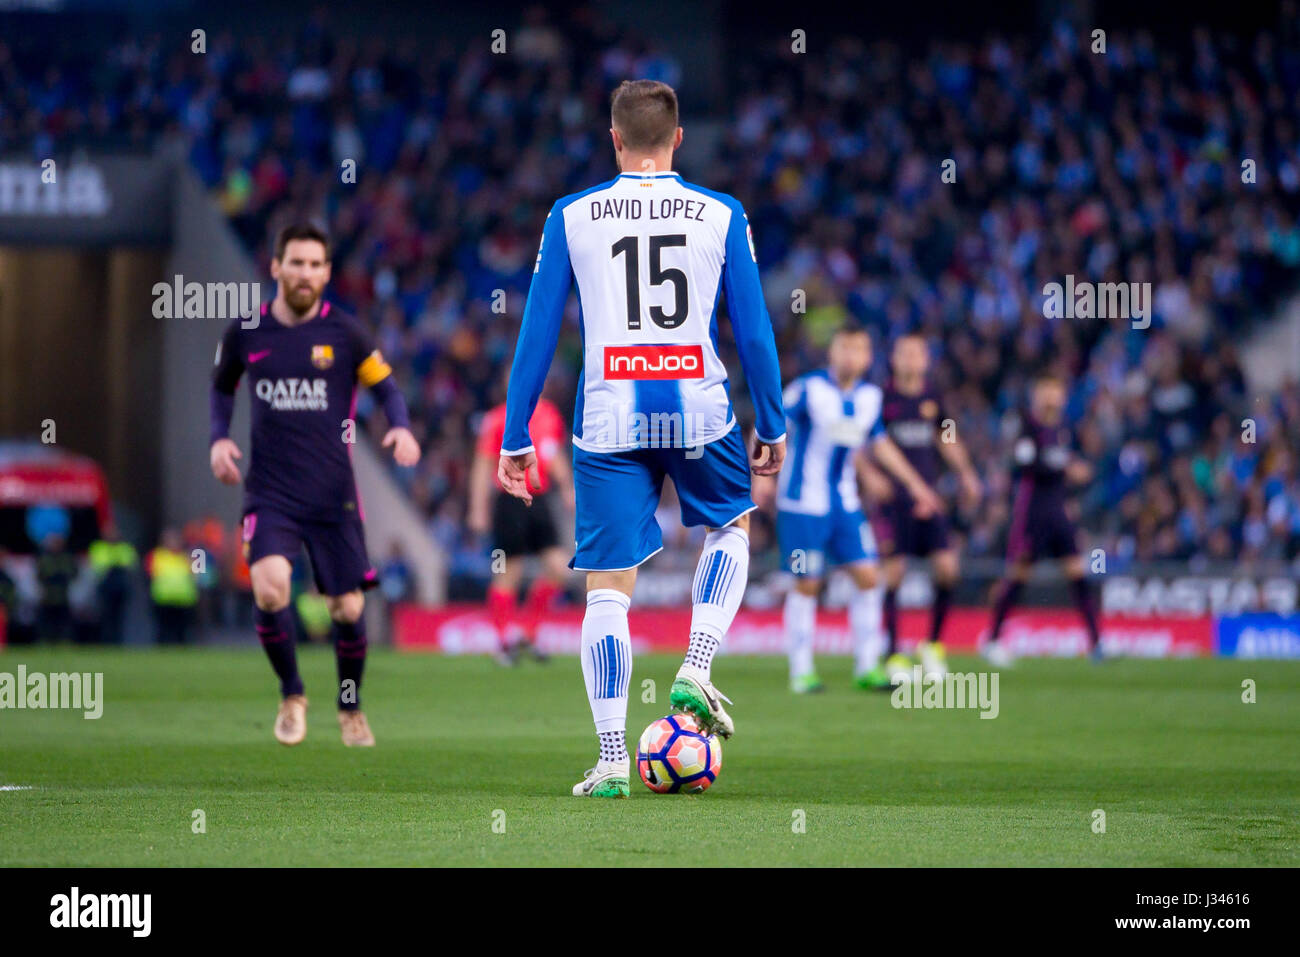 BARCELONA - APR 29: David Lopez plays at the La Liga match between RCD Espanyol and FC Barcelona at RCDE Stadium on April 29, 2017 in Barcelona, Spain Stock Photo